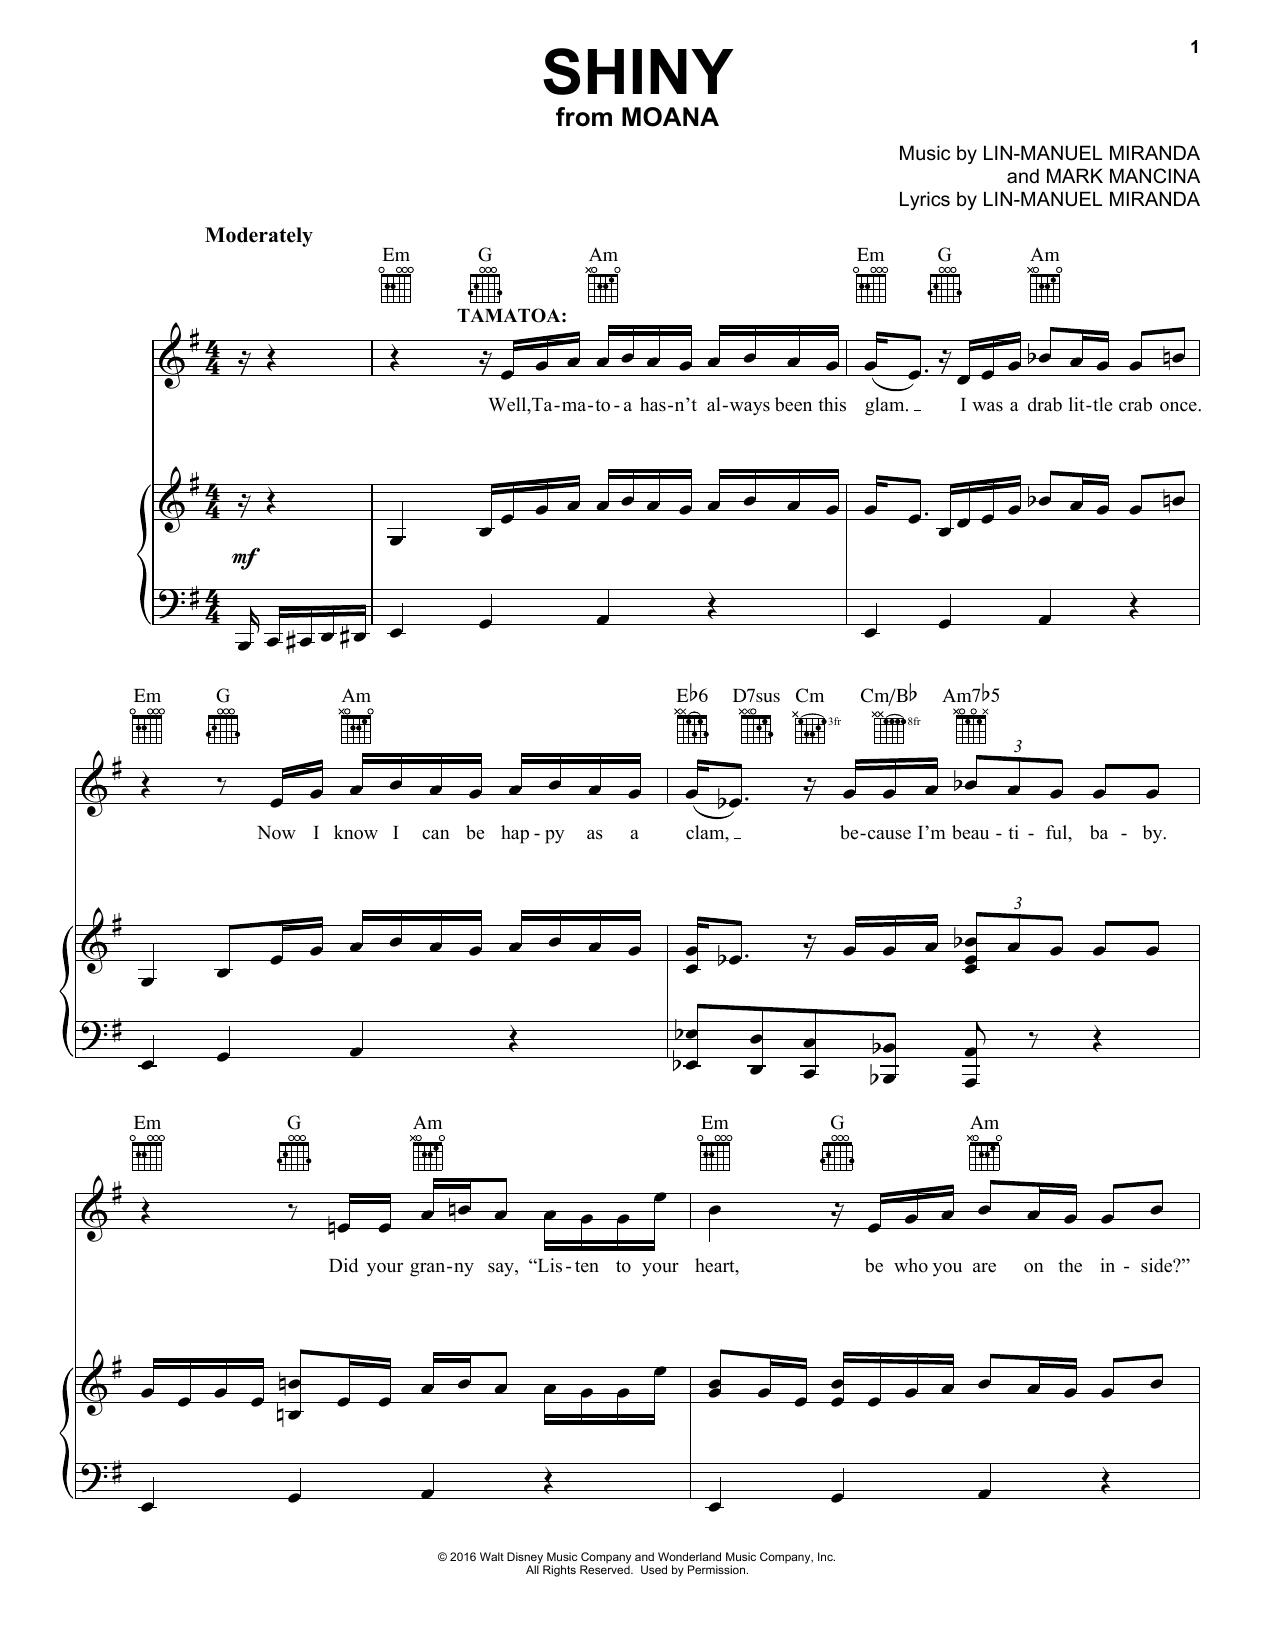 Lin-Manuel Miranda Shiny (from Moana) Sheet Music Notes & Chords for Easy Piano - Download or Print PDF